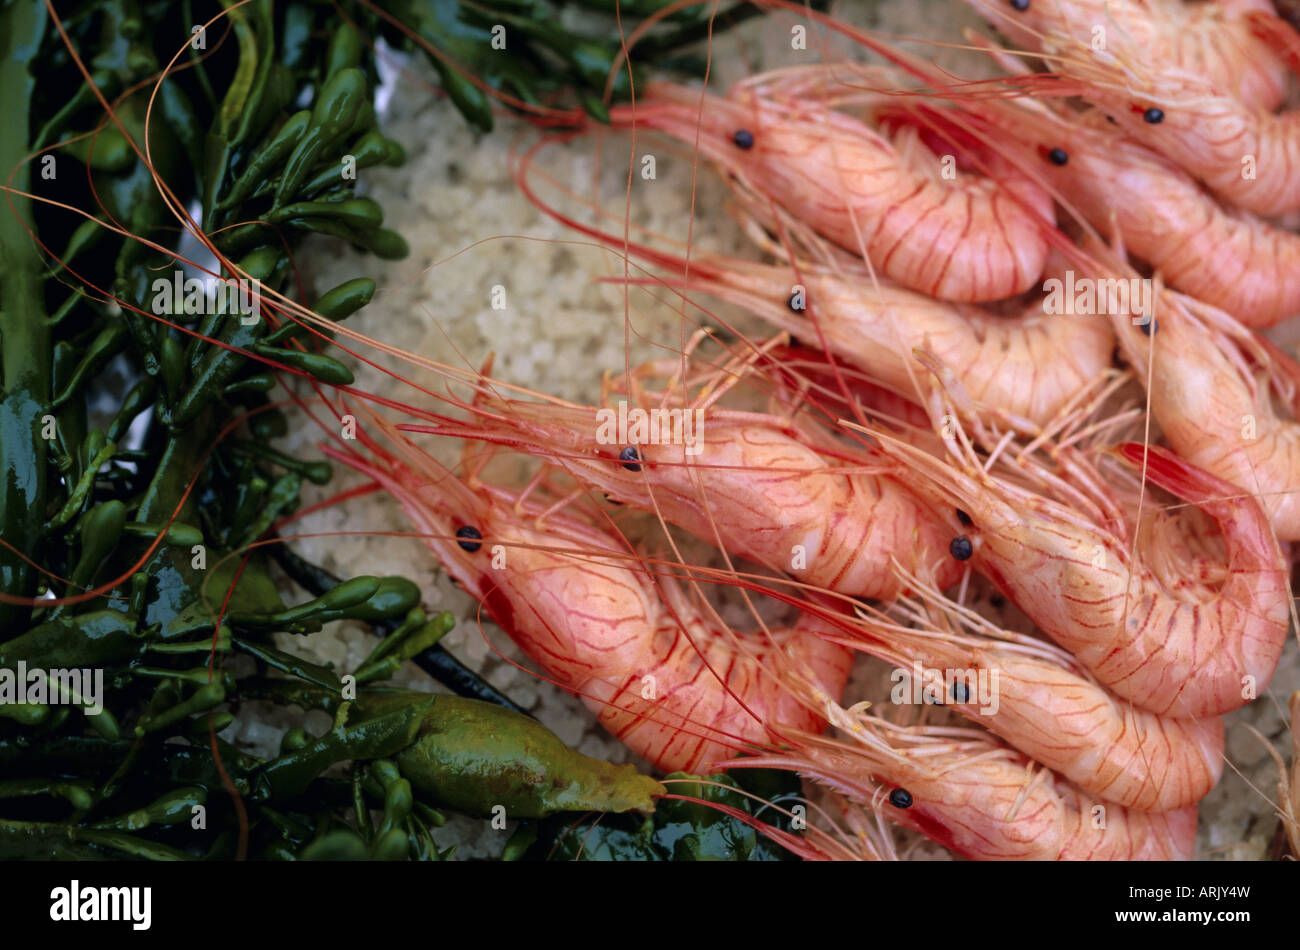 Crevettes (prawns), Le Bistrot de Bernard, Ars, Ile de Re, Charente  Maritime, France, Europe Stock Photo - Alamy